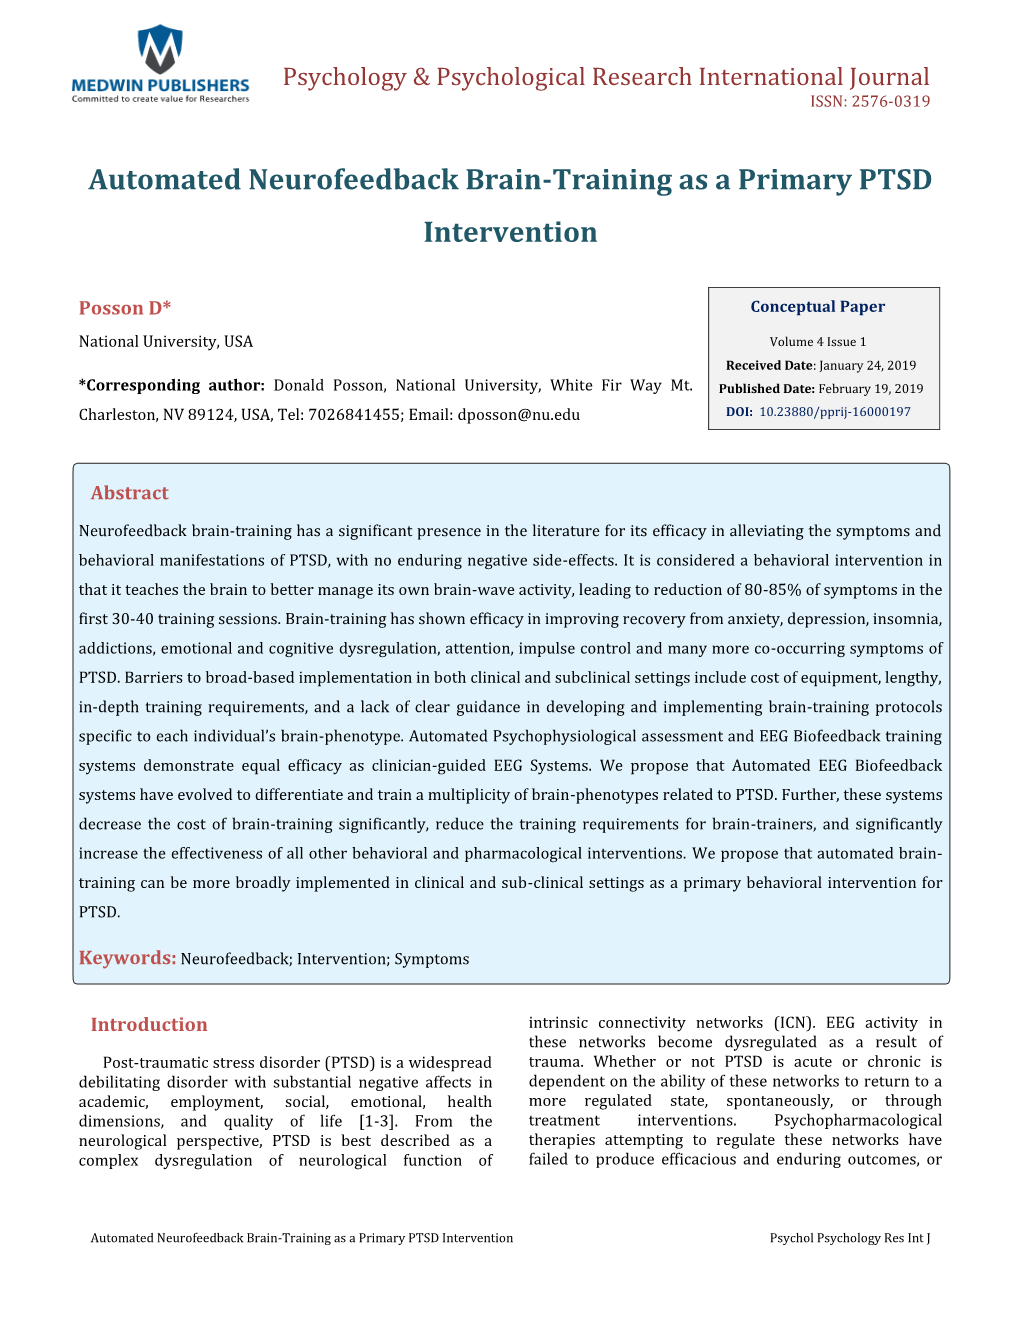 Automated Neurofeedback Brain-Training As a Primary PTSD Intervention